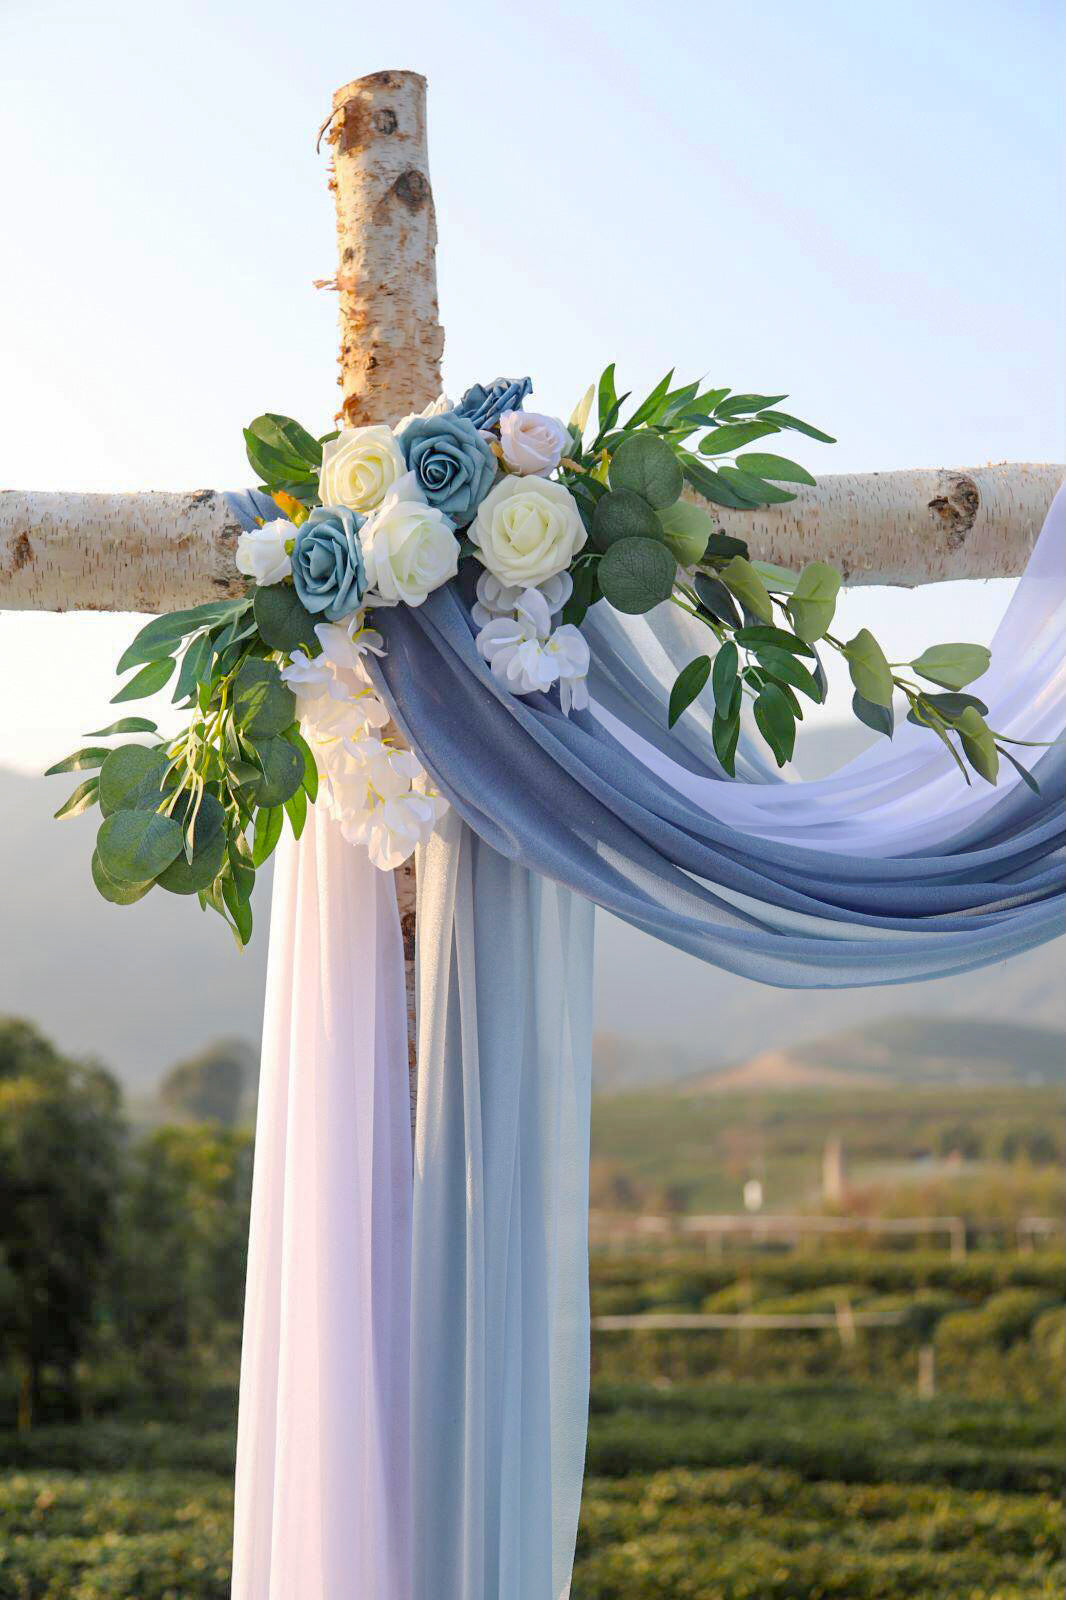 3 Pcs Romantic Wedding Arch Draping 29"w x 19.7ft - Dusty Blue & White & Gray